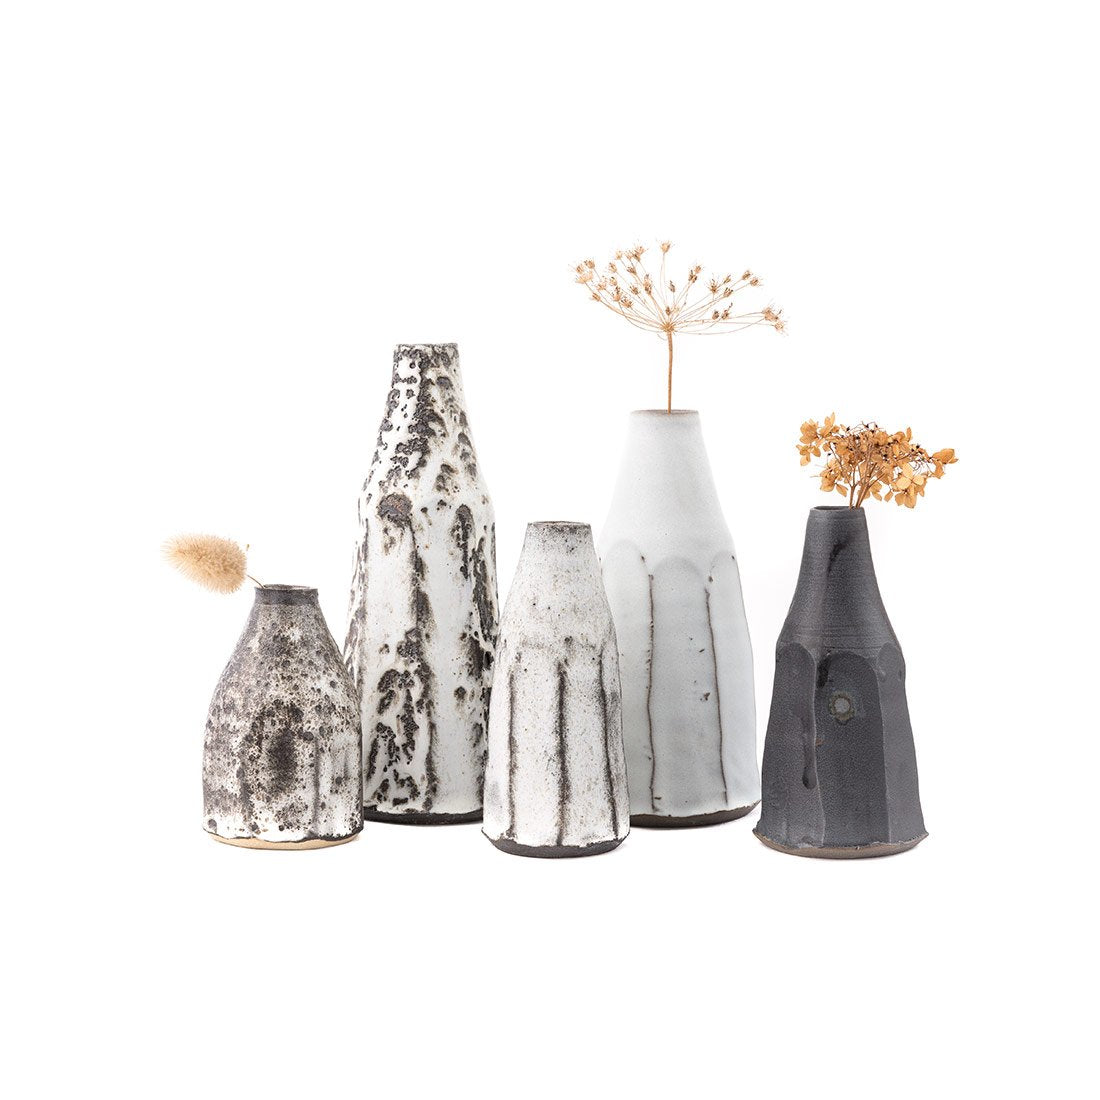 Faceted Ceramic Vessels